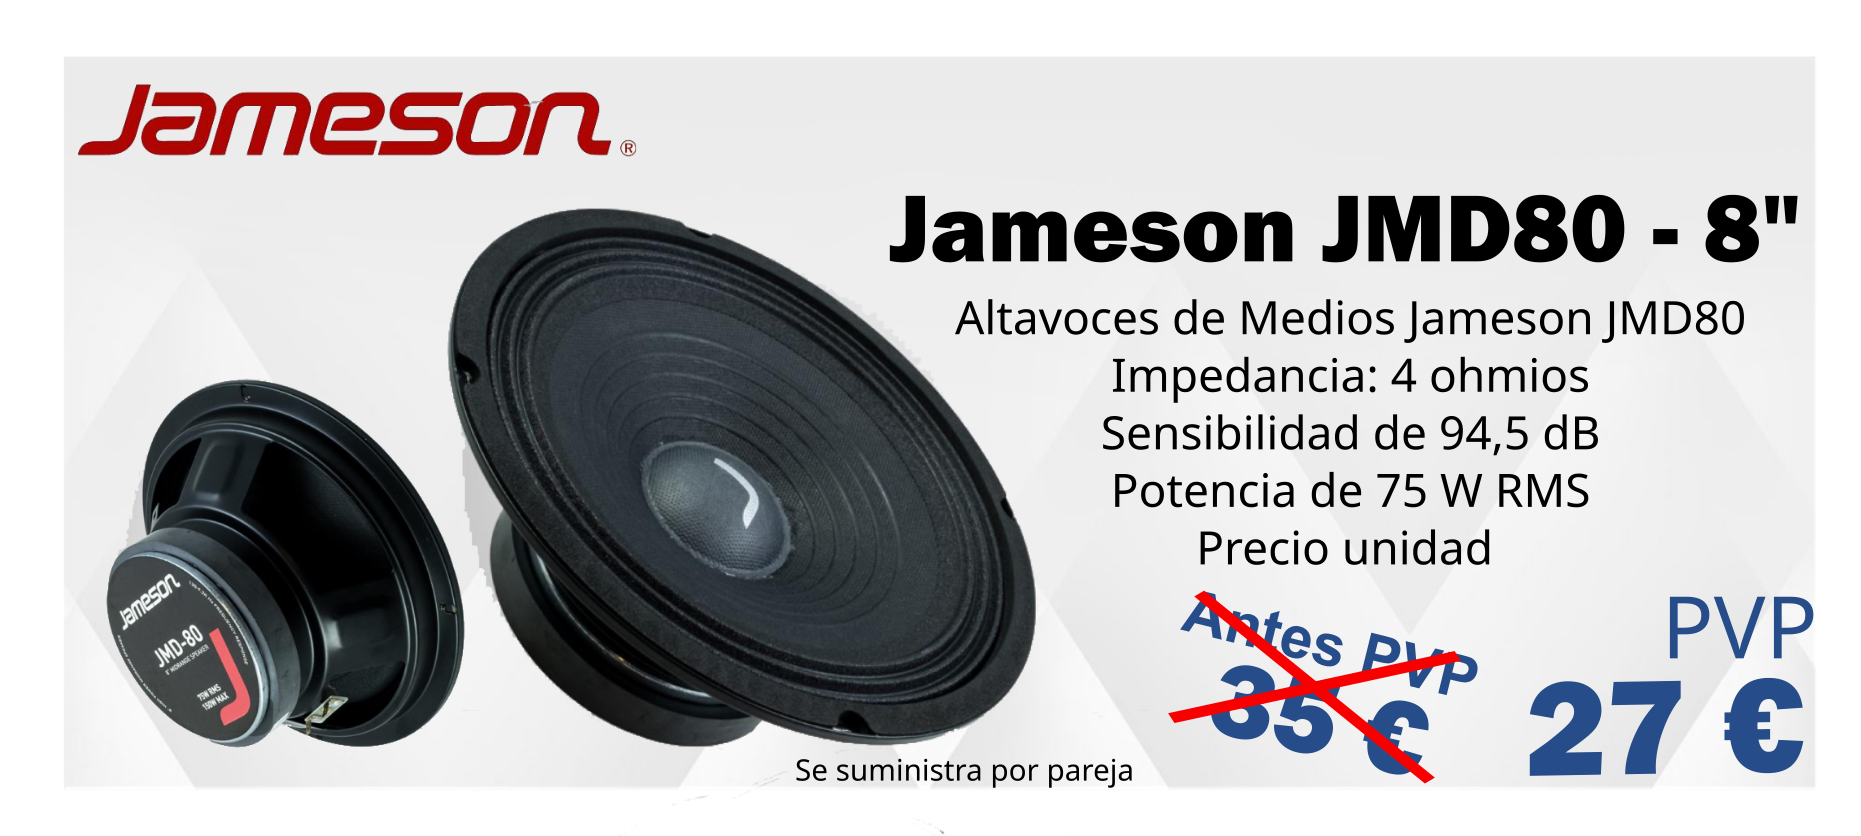 Altavoz de Medios Jameson JMD80 